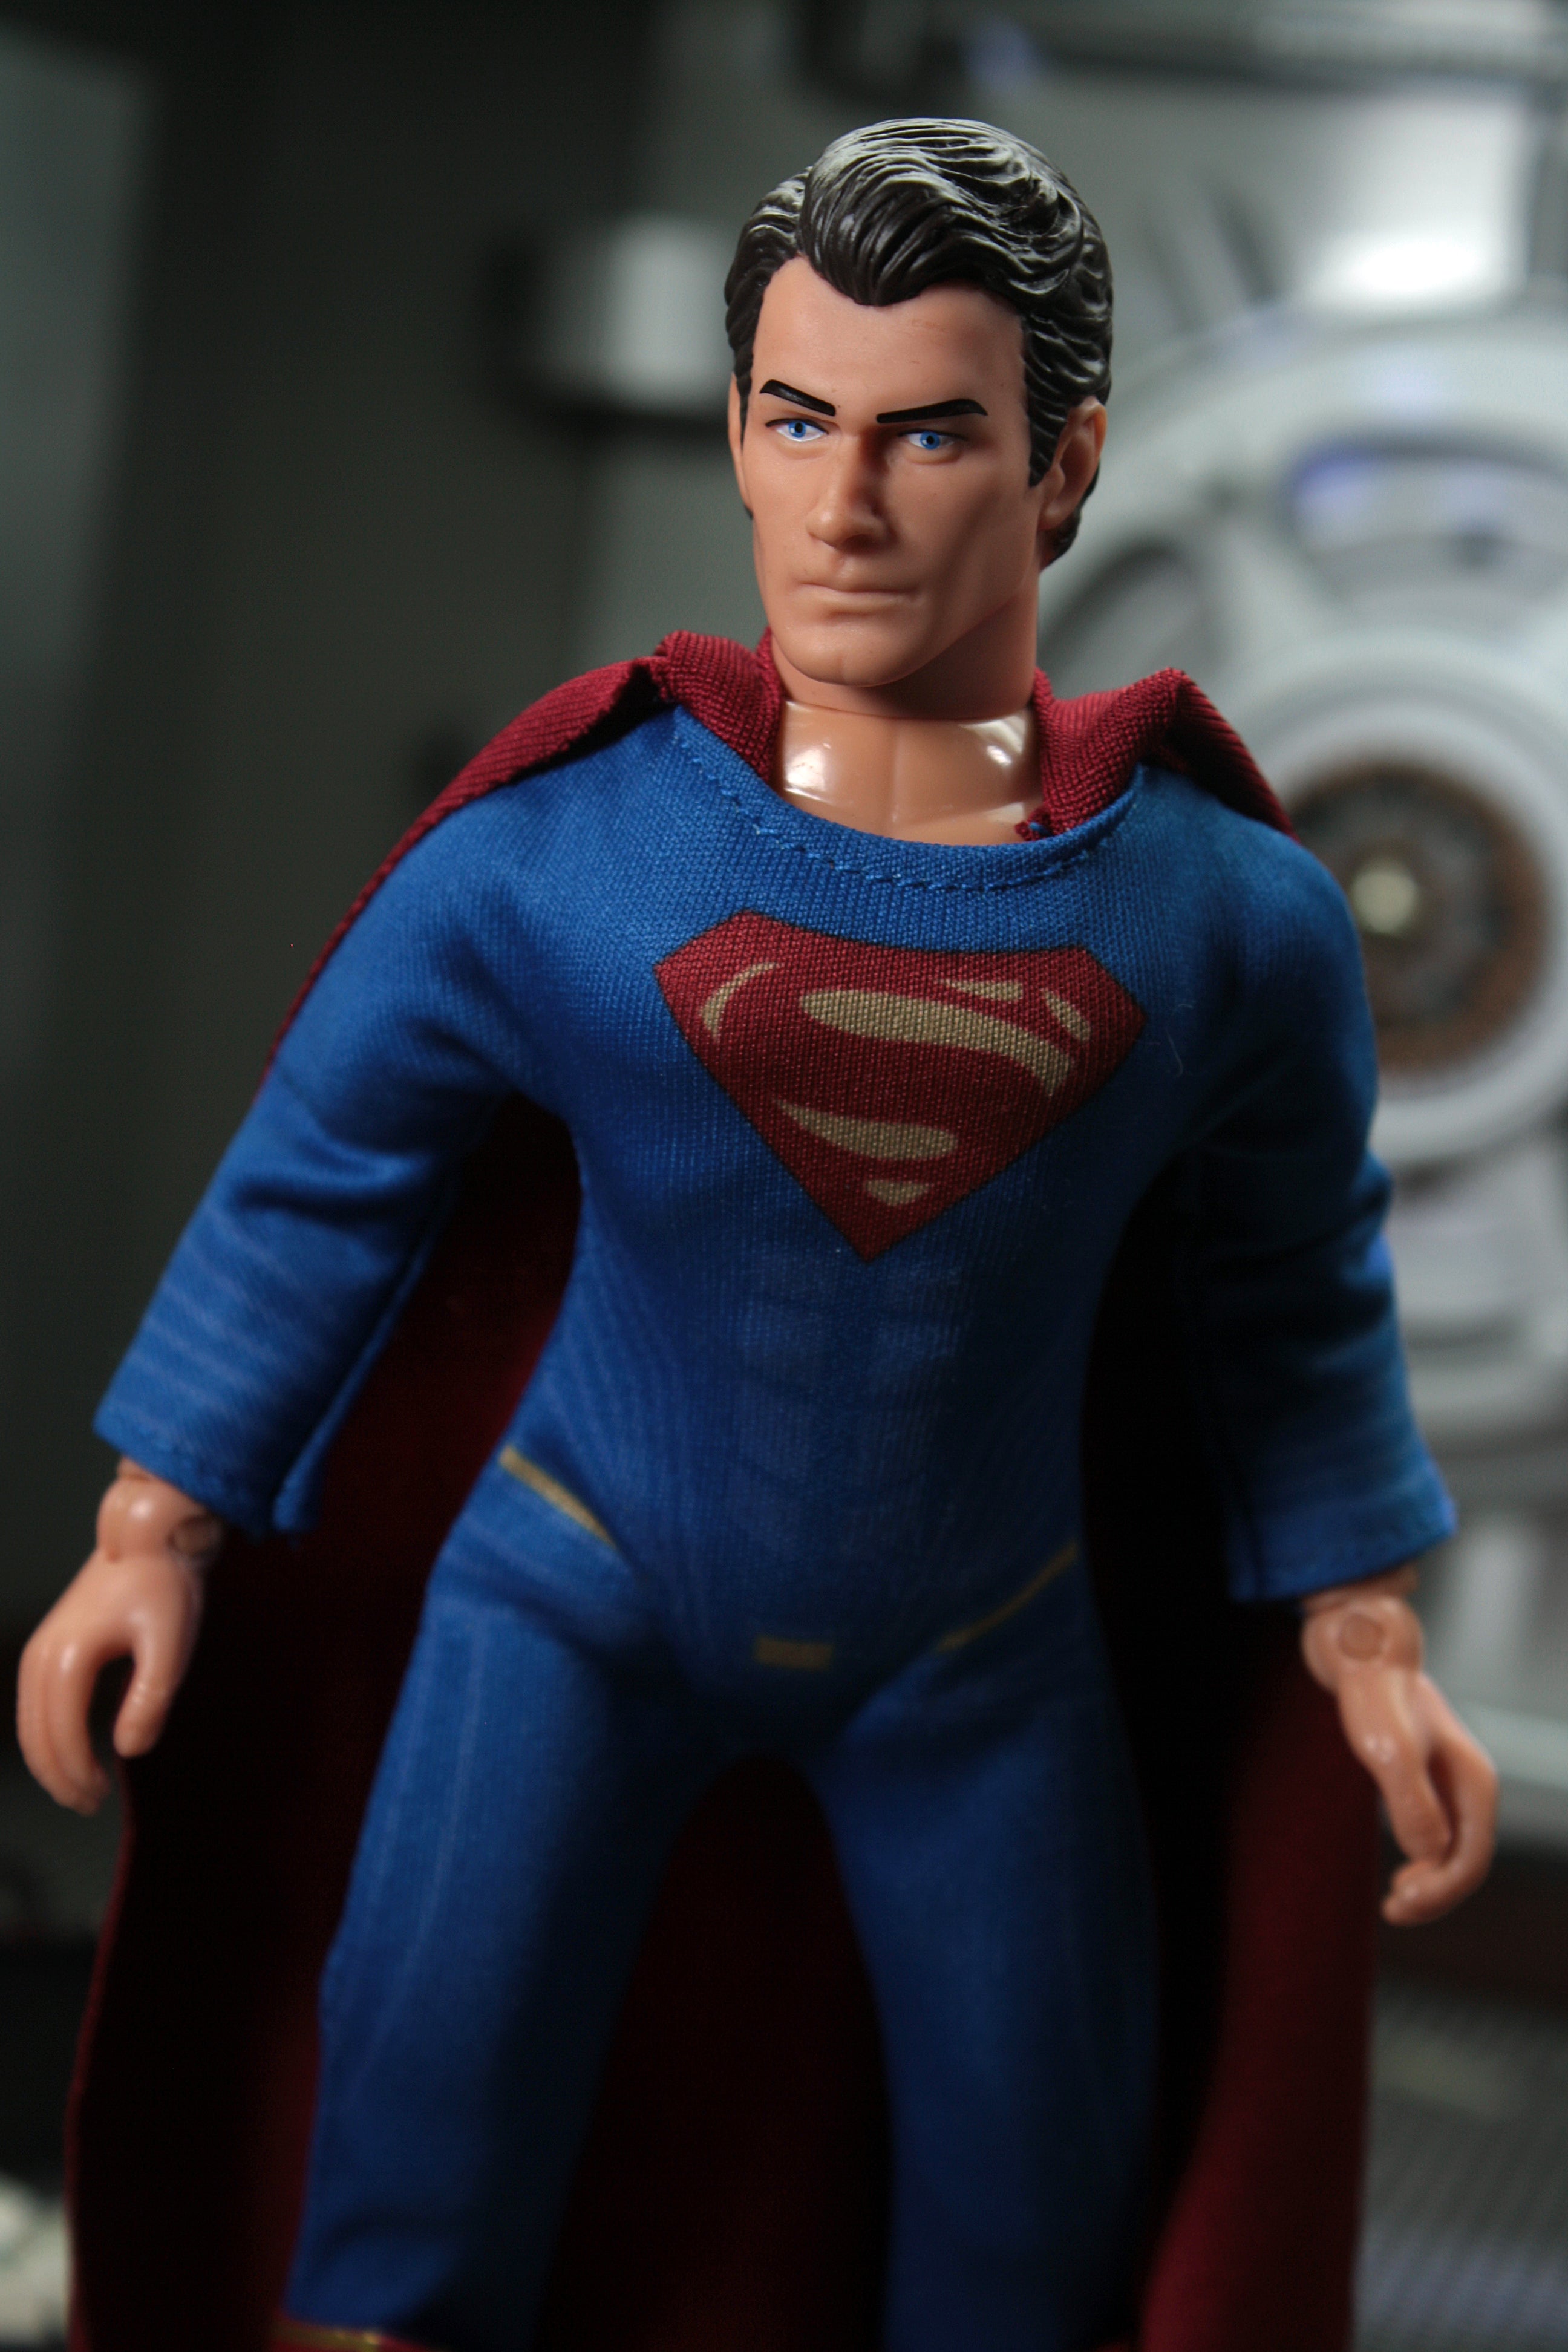 Man of Steel Superman 1:6 - Hot Toys